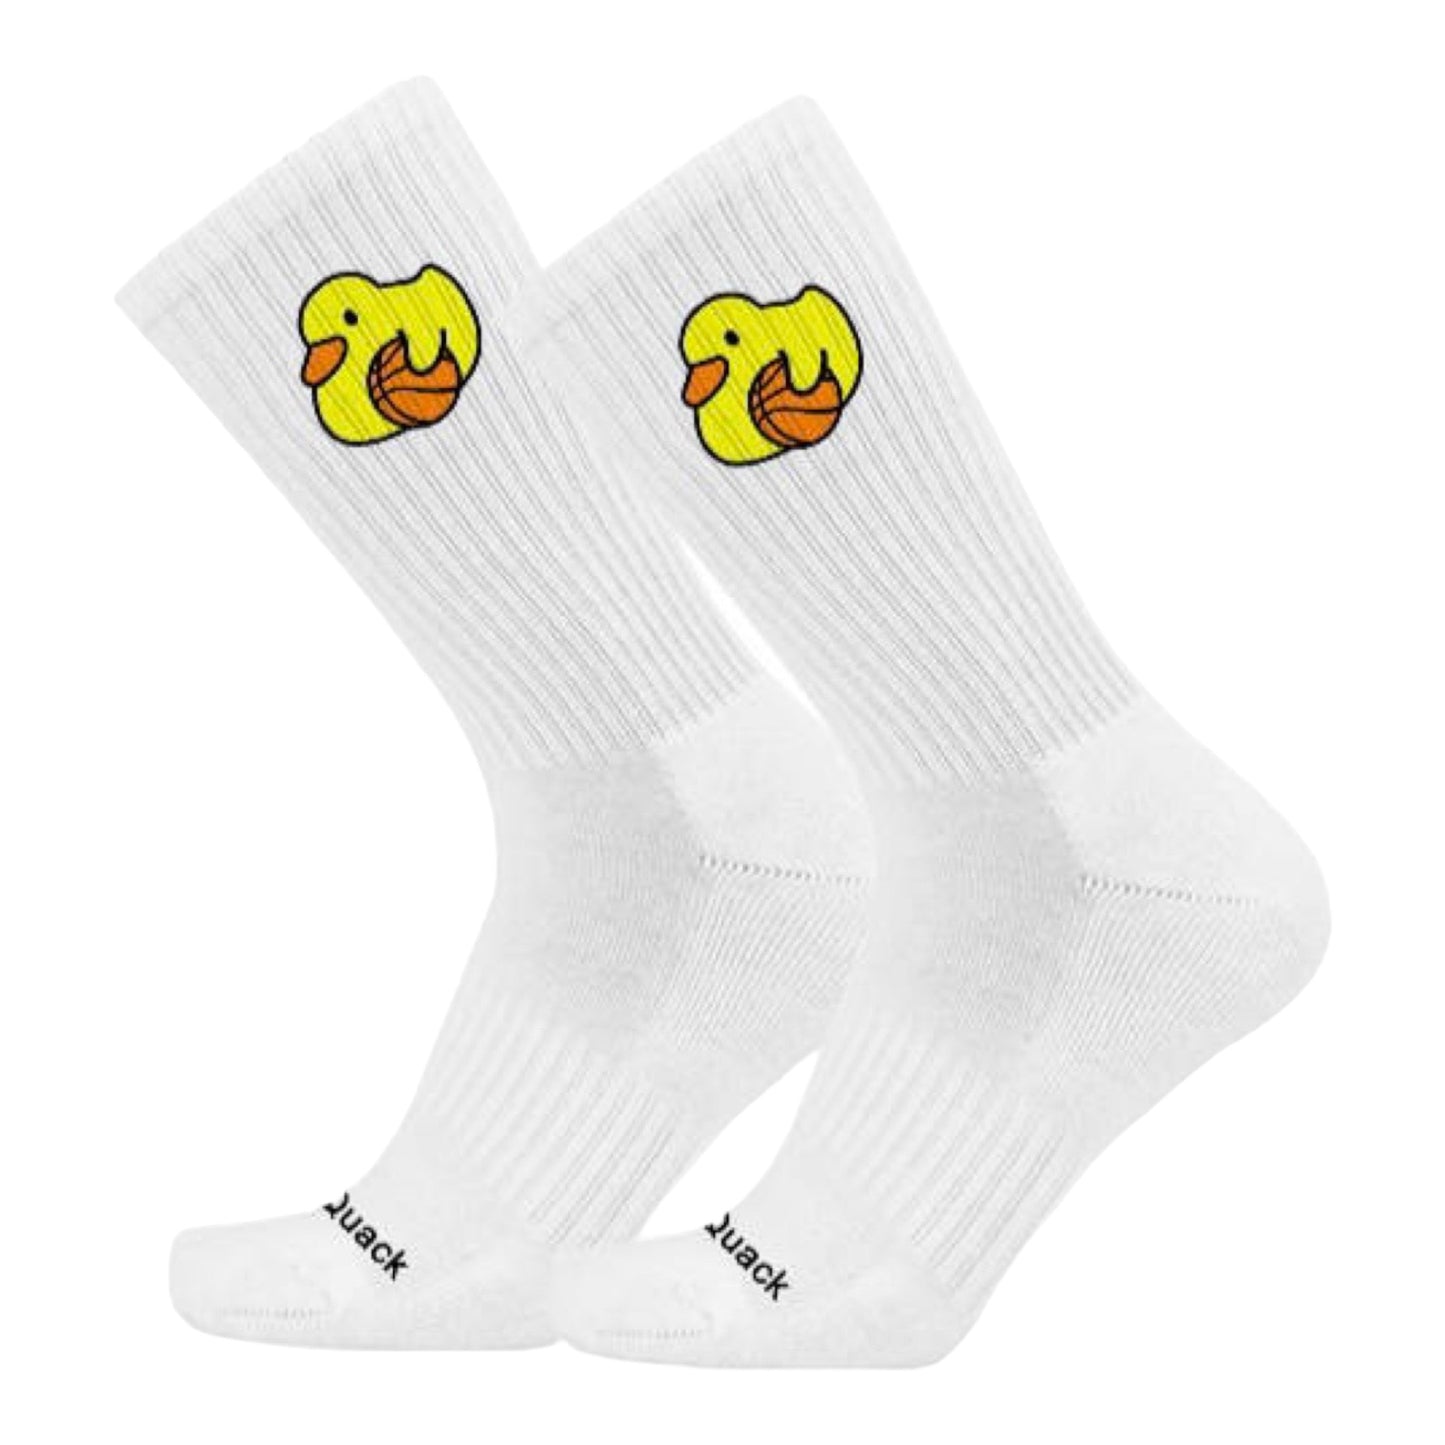 Quack-Fit Training Socks (2 Pairs)